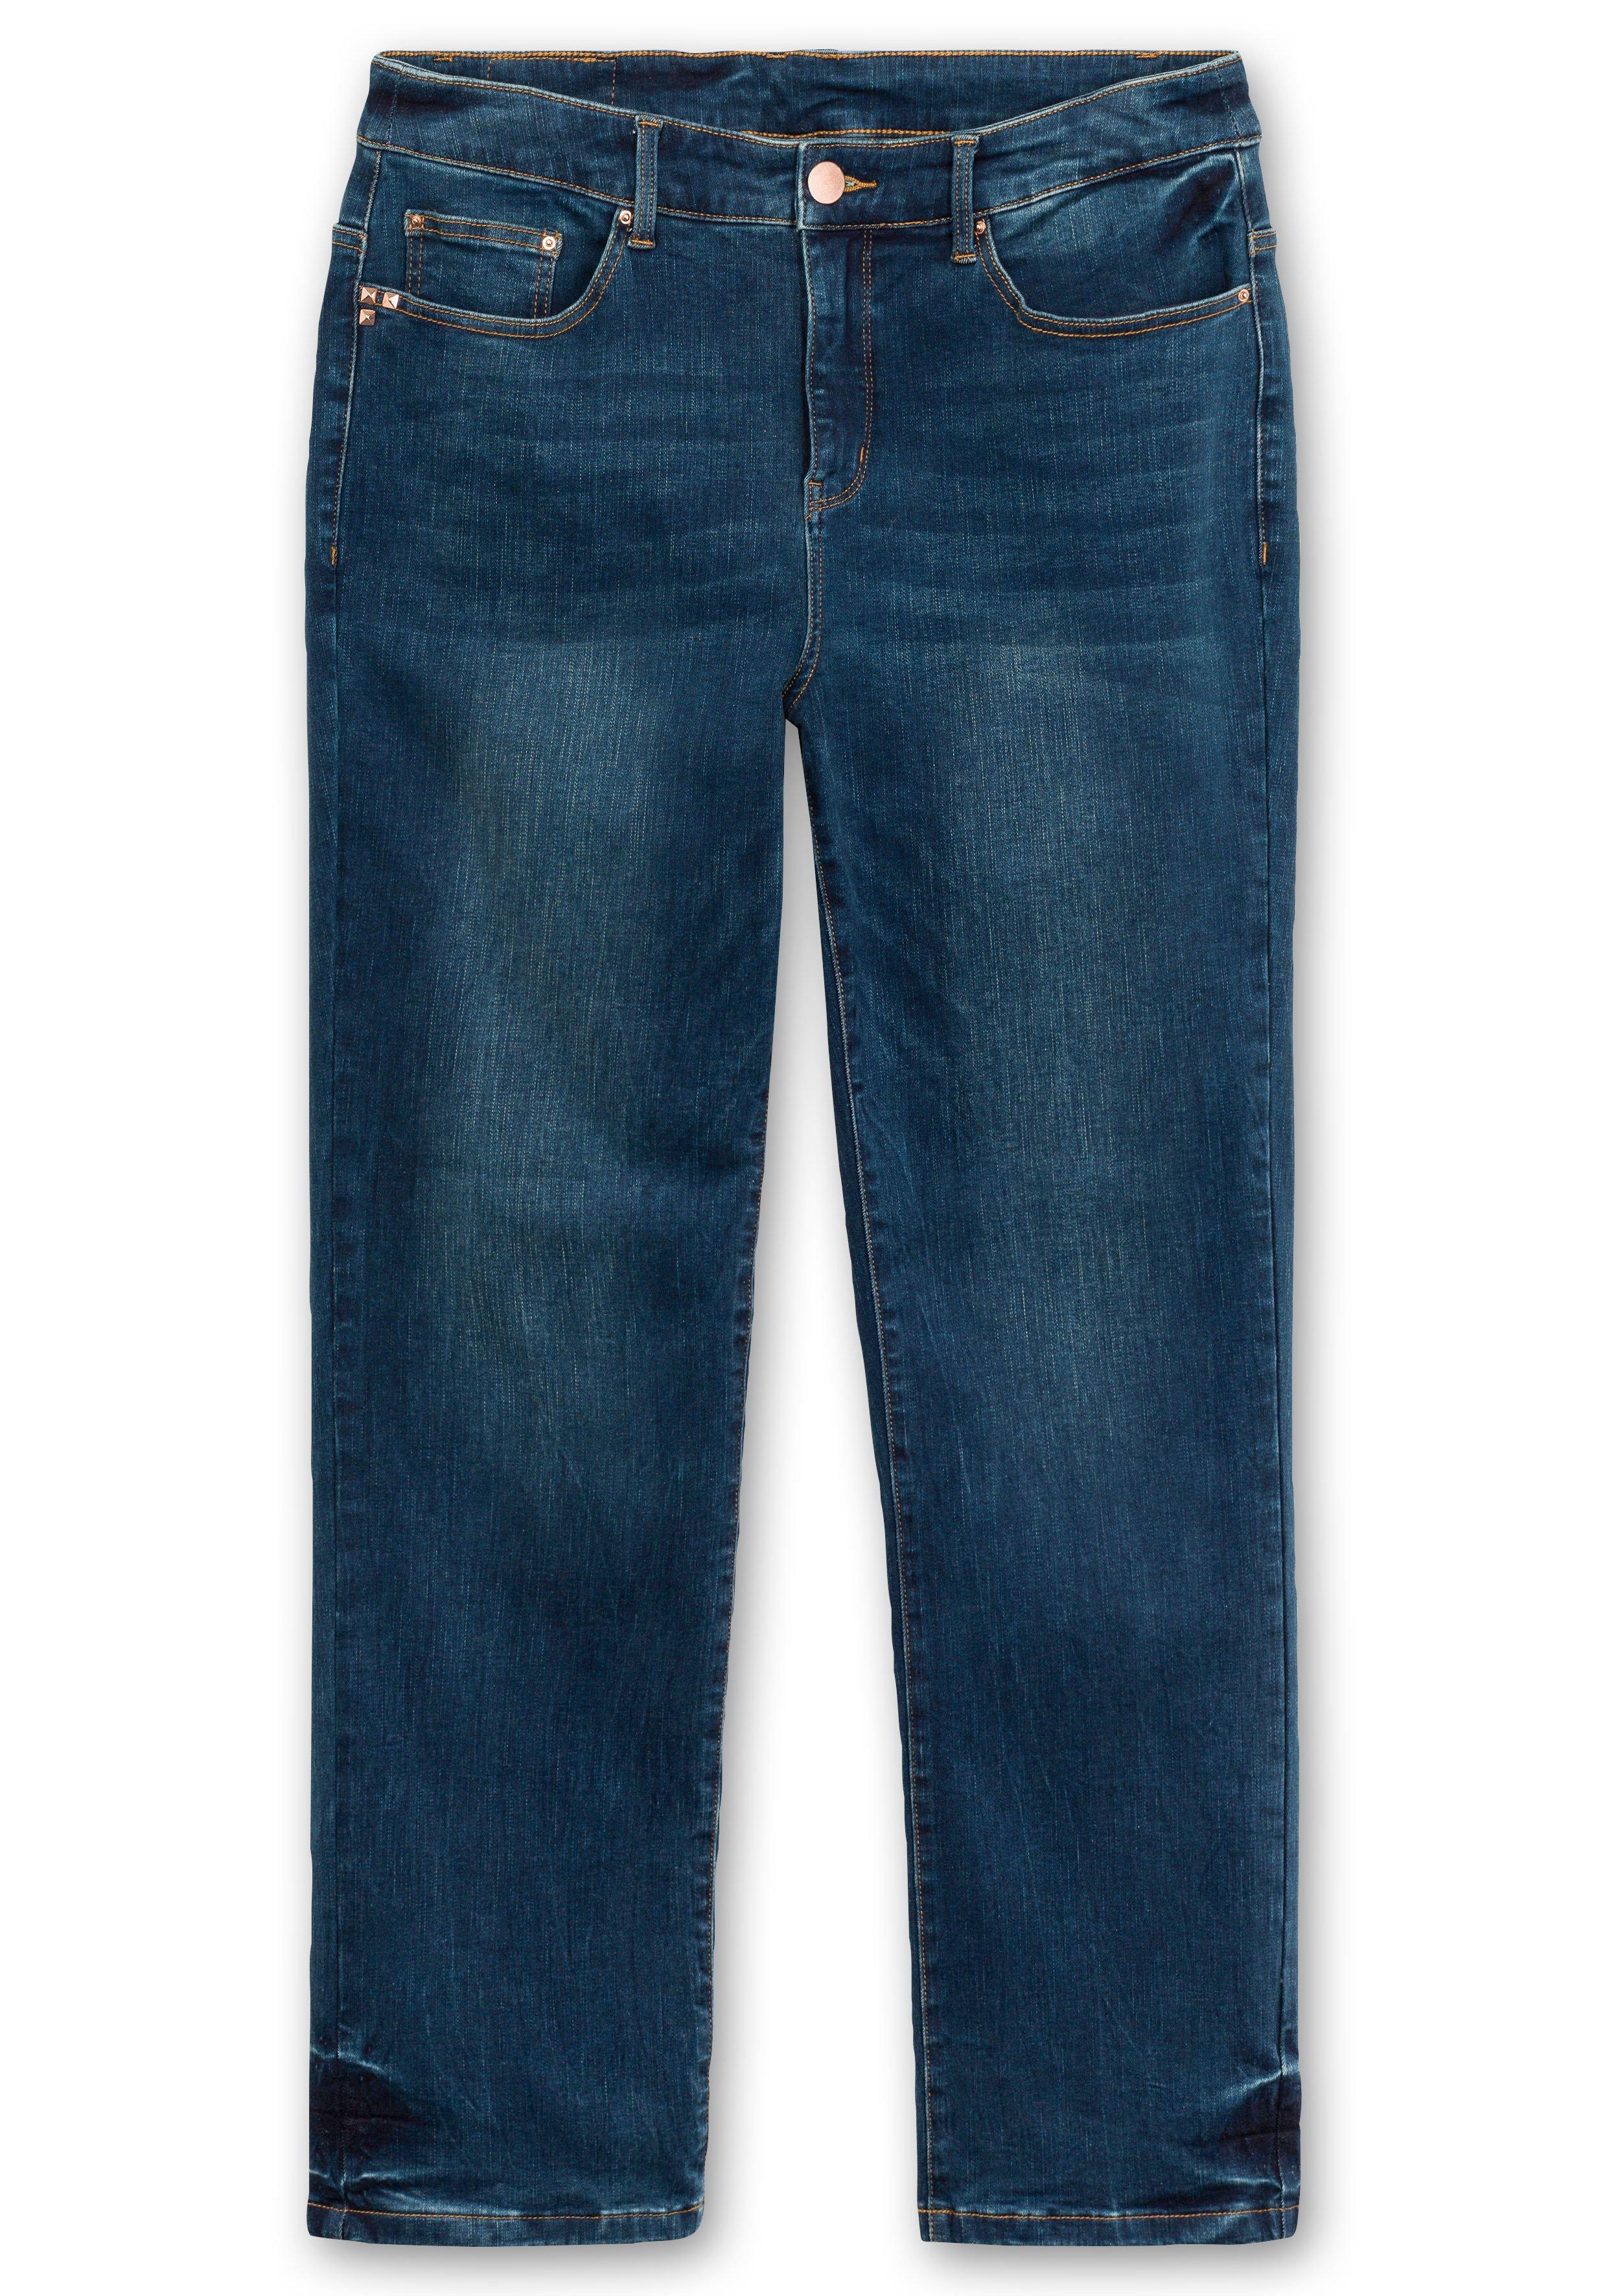 Gerade Stretch-Jeans blue mit | Bodyforming-Effekt - sheego Denim